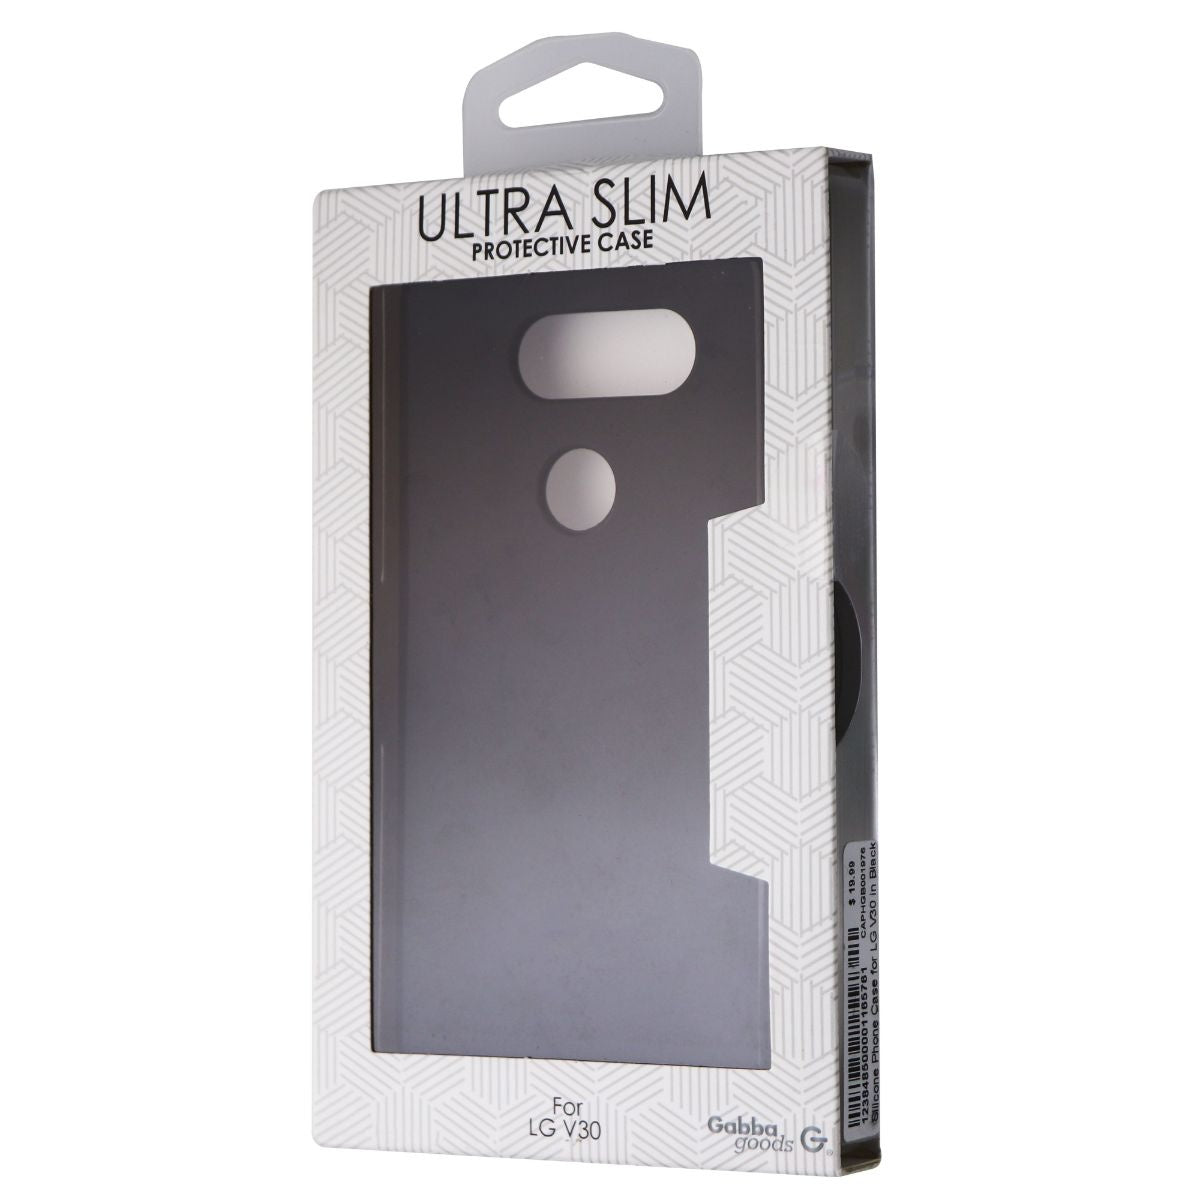 Gabba Goods Ultra Slim Gel Case for LG V30 Smartphone - Black Cell Phone - Cases, Covers & Skins GabbaGoods    - Simple Cell Bulk Wholesale Pricing - USA Seller